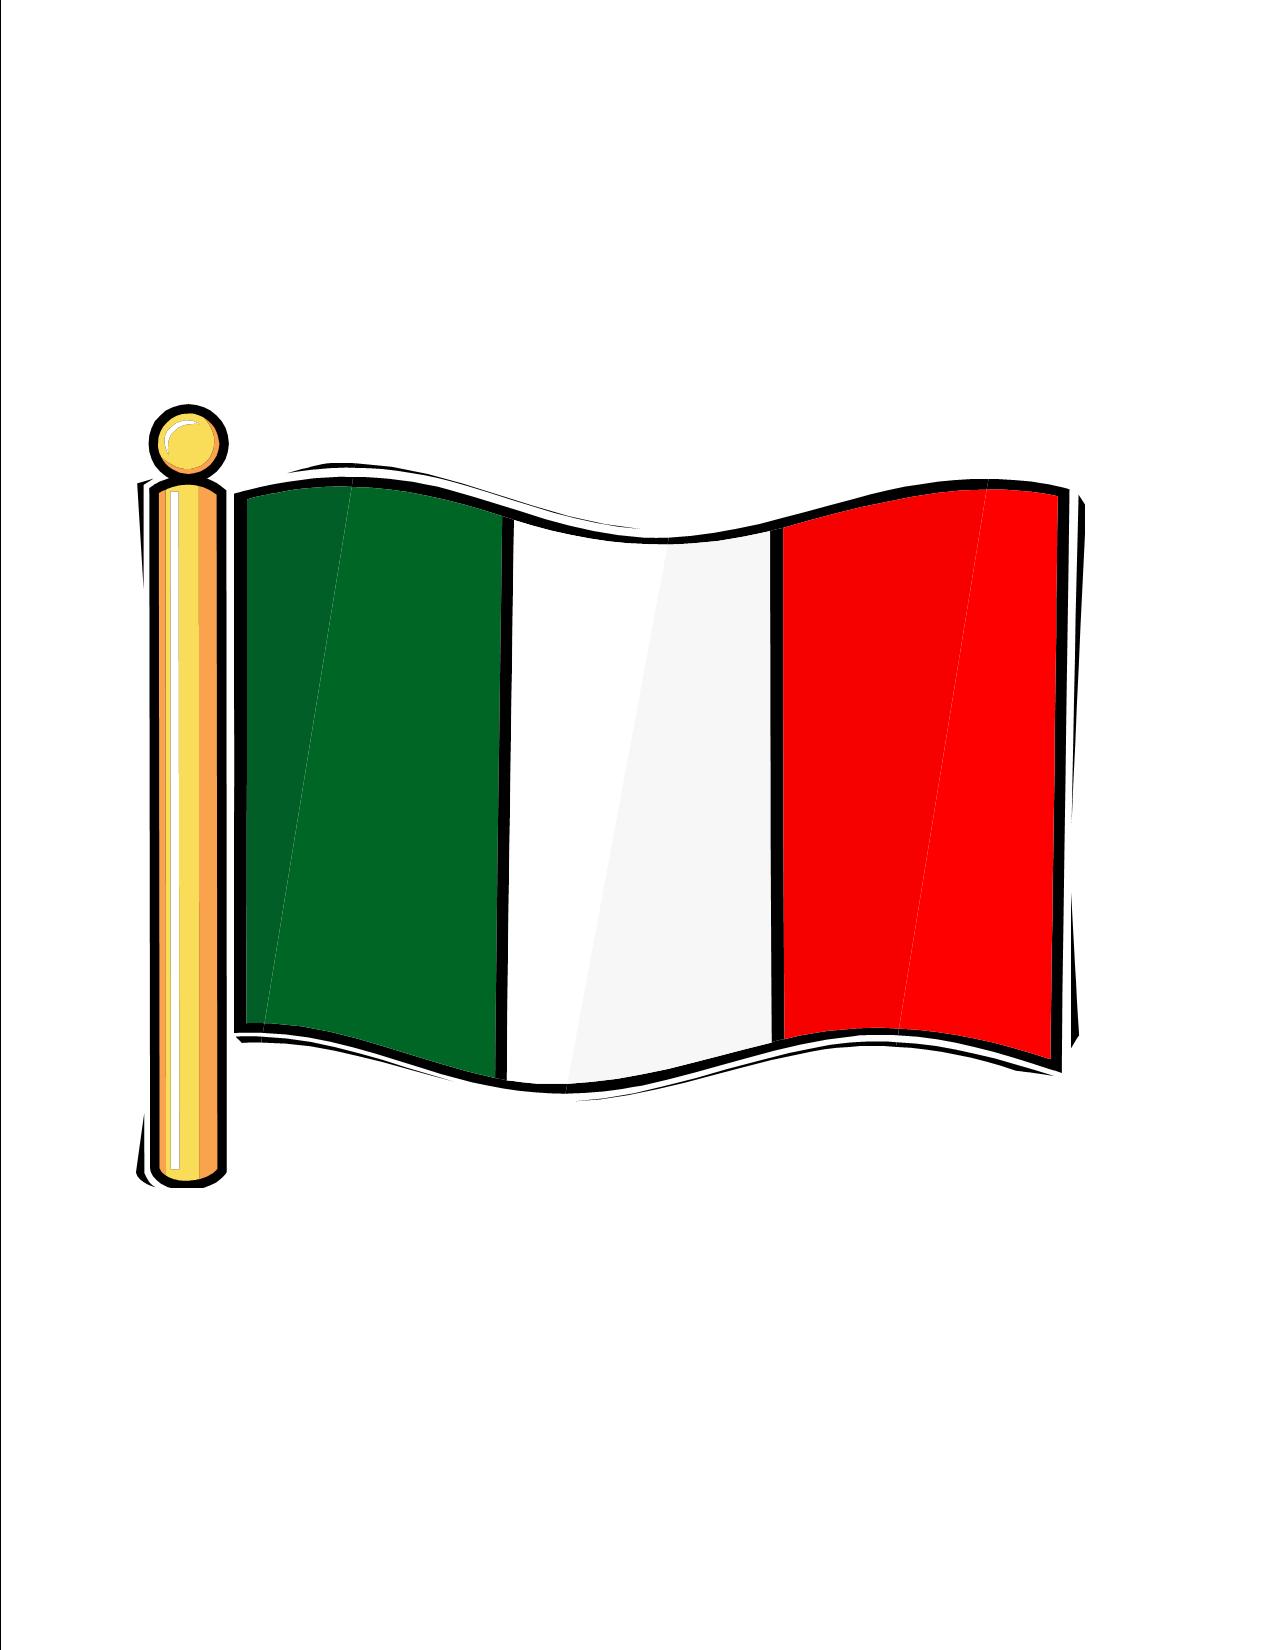 ... Italian flag images clip art ...